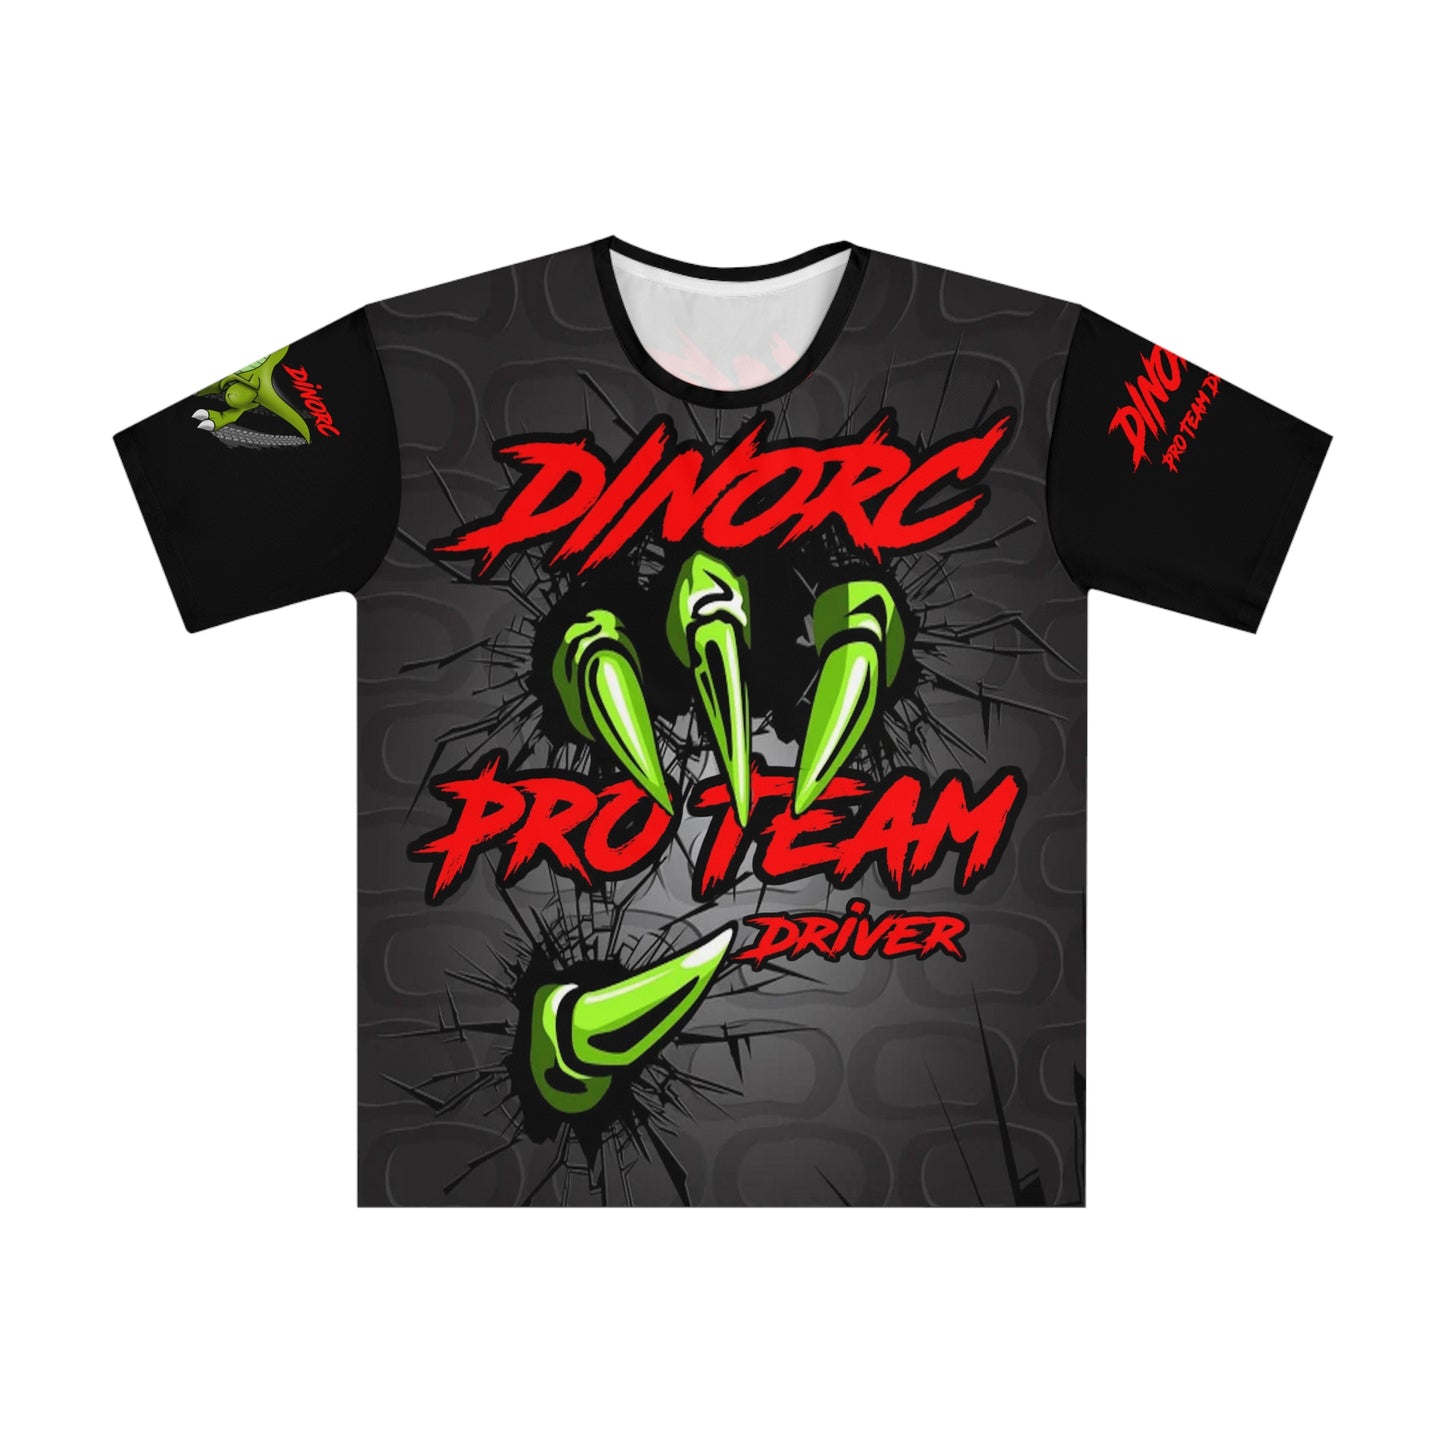 Pro Team Team drivers T shirt  Men's Loose T-shirt (AOP)